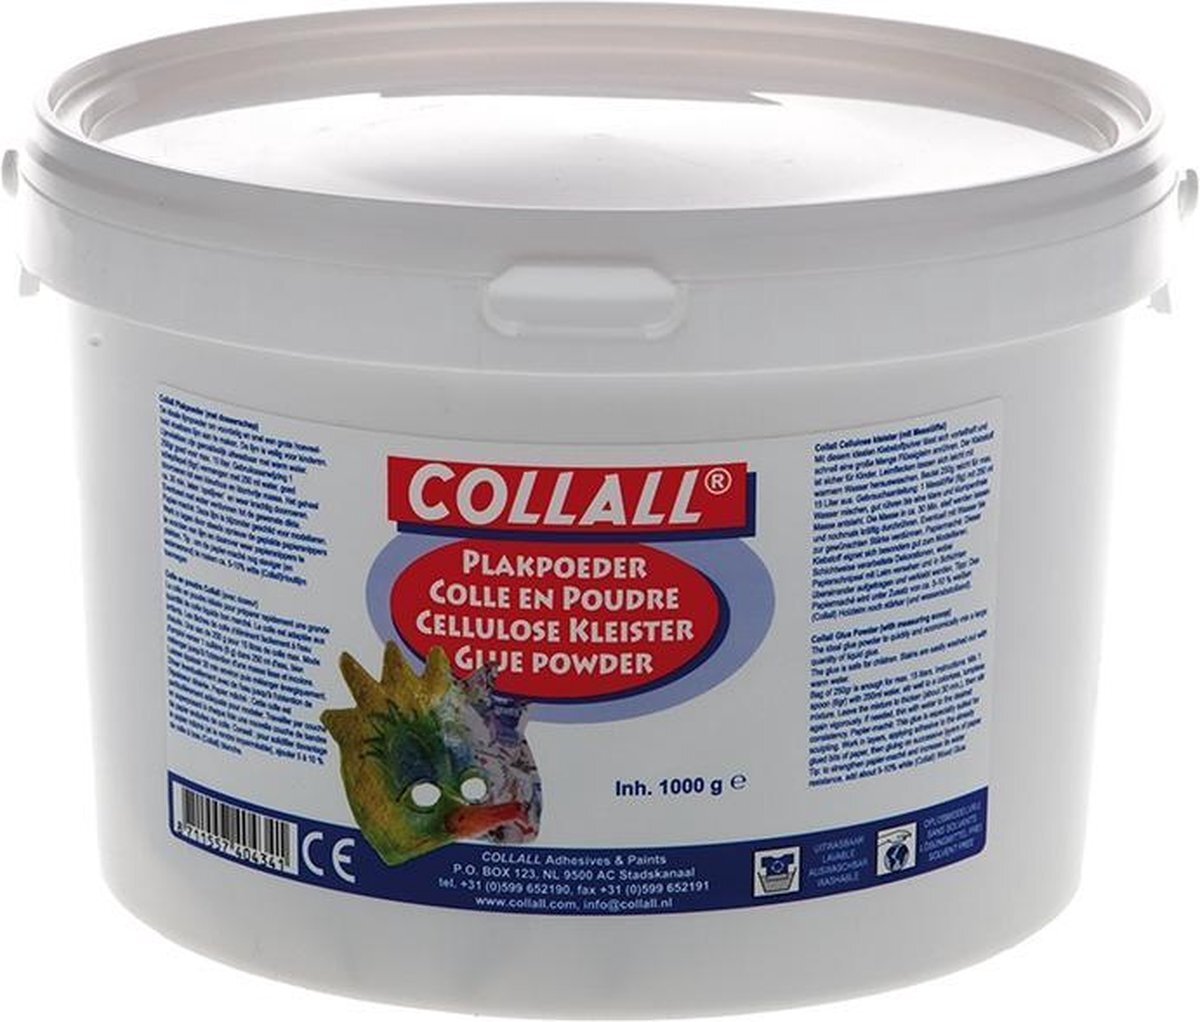 Collall Plakpoeder - 1000 gram + Maatlepel